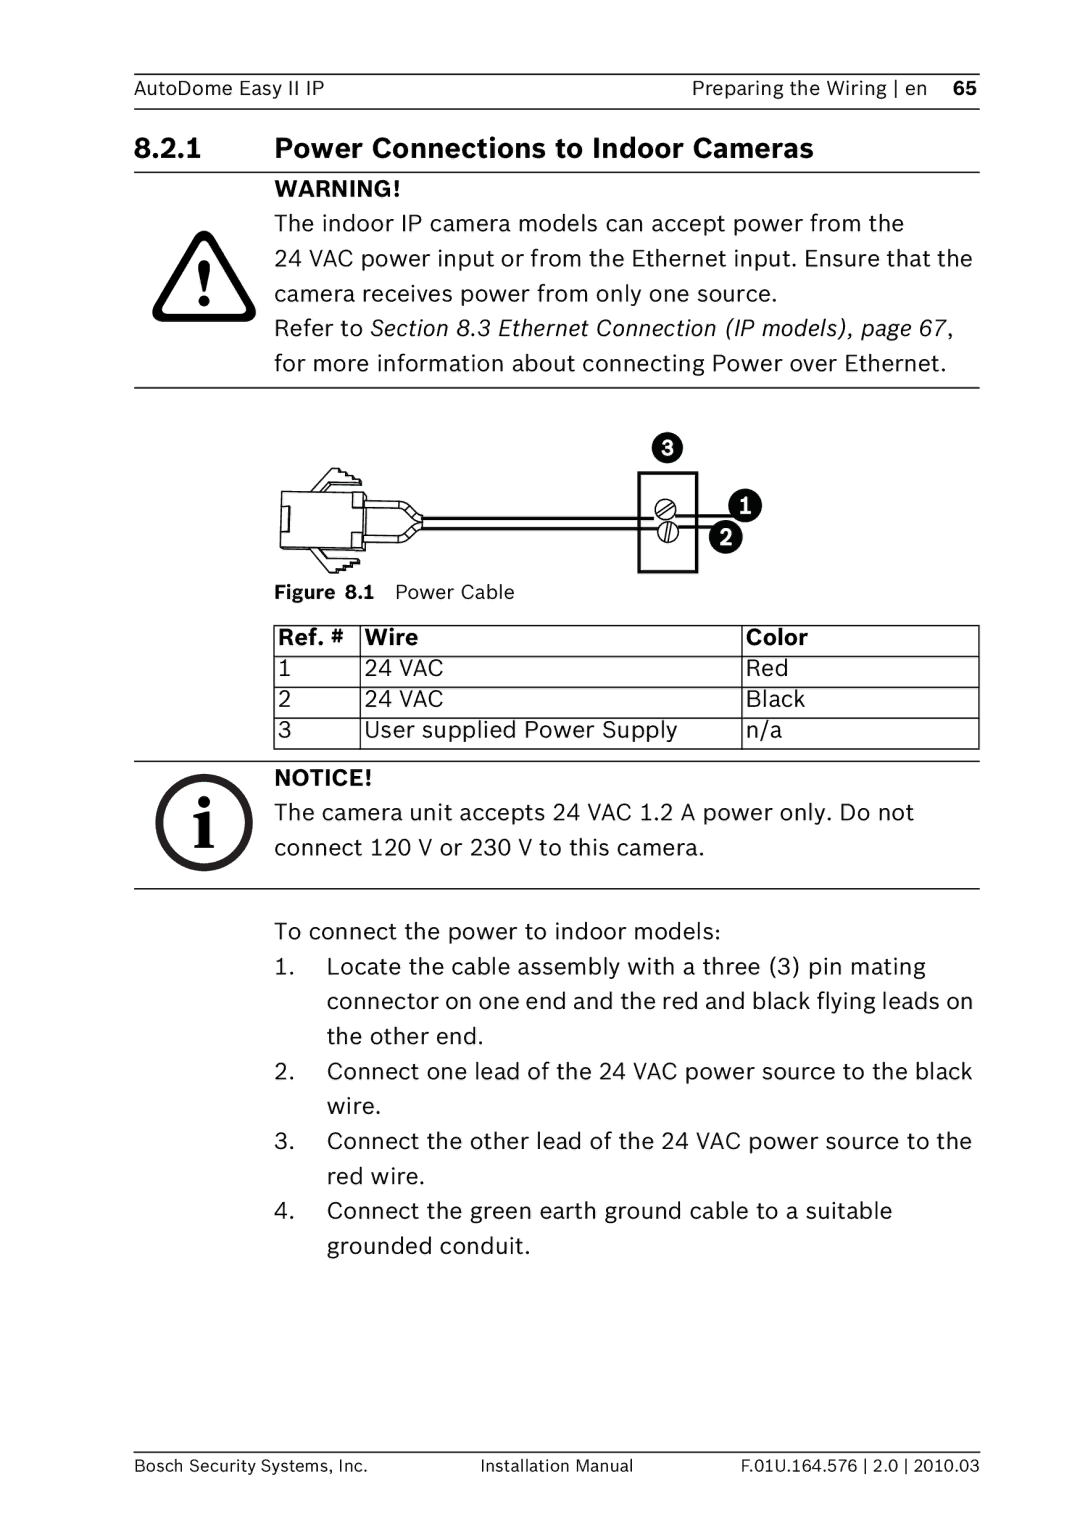 Bosch Appliances VEZ installation manual Power Connections to Indoor Cameras, Ref. # Wire Color 